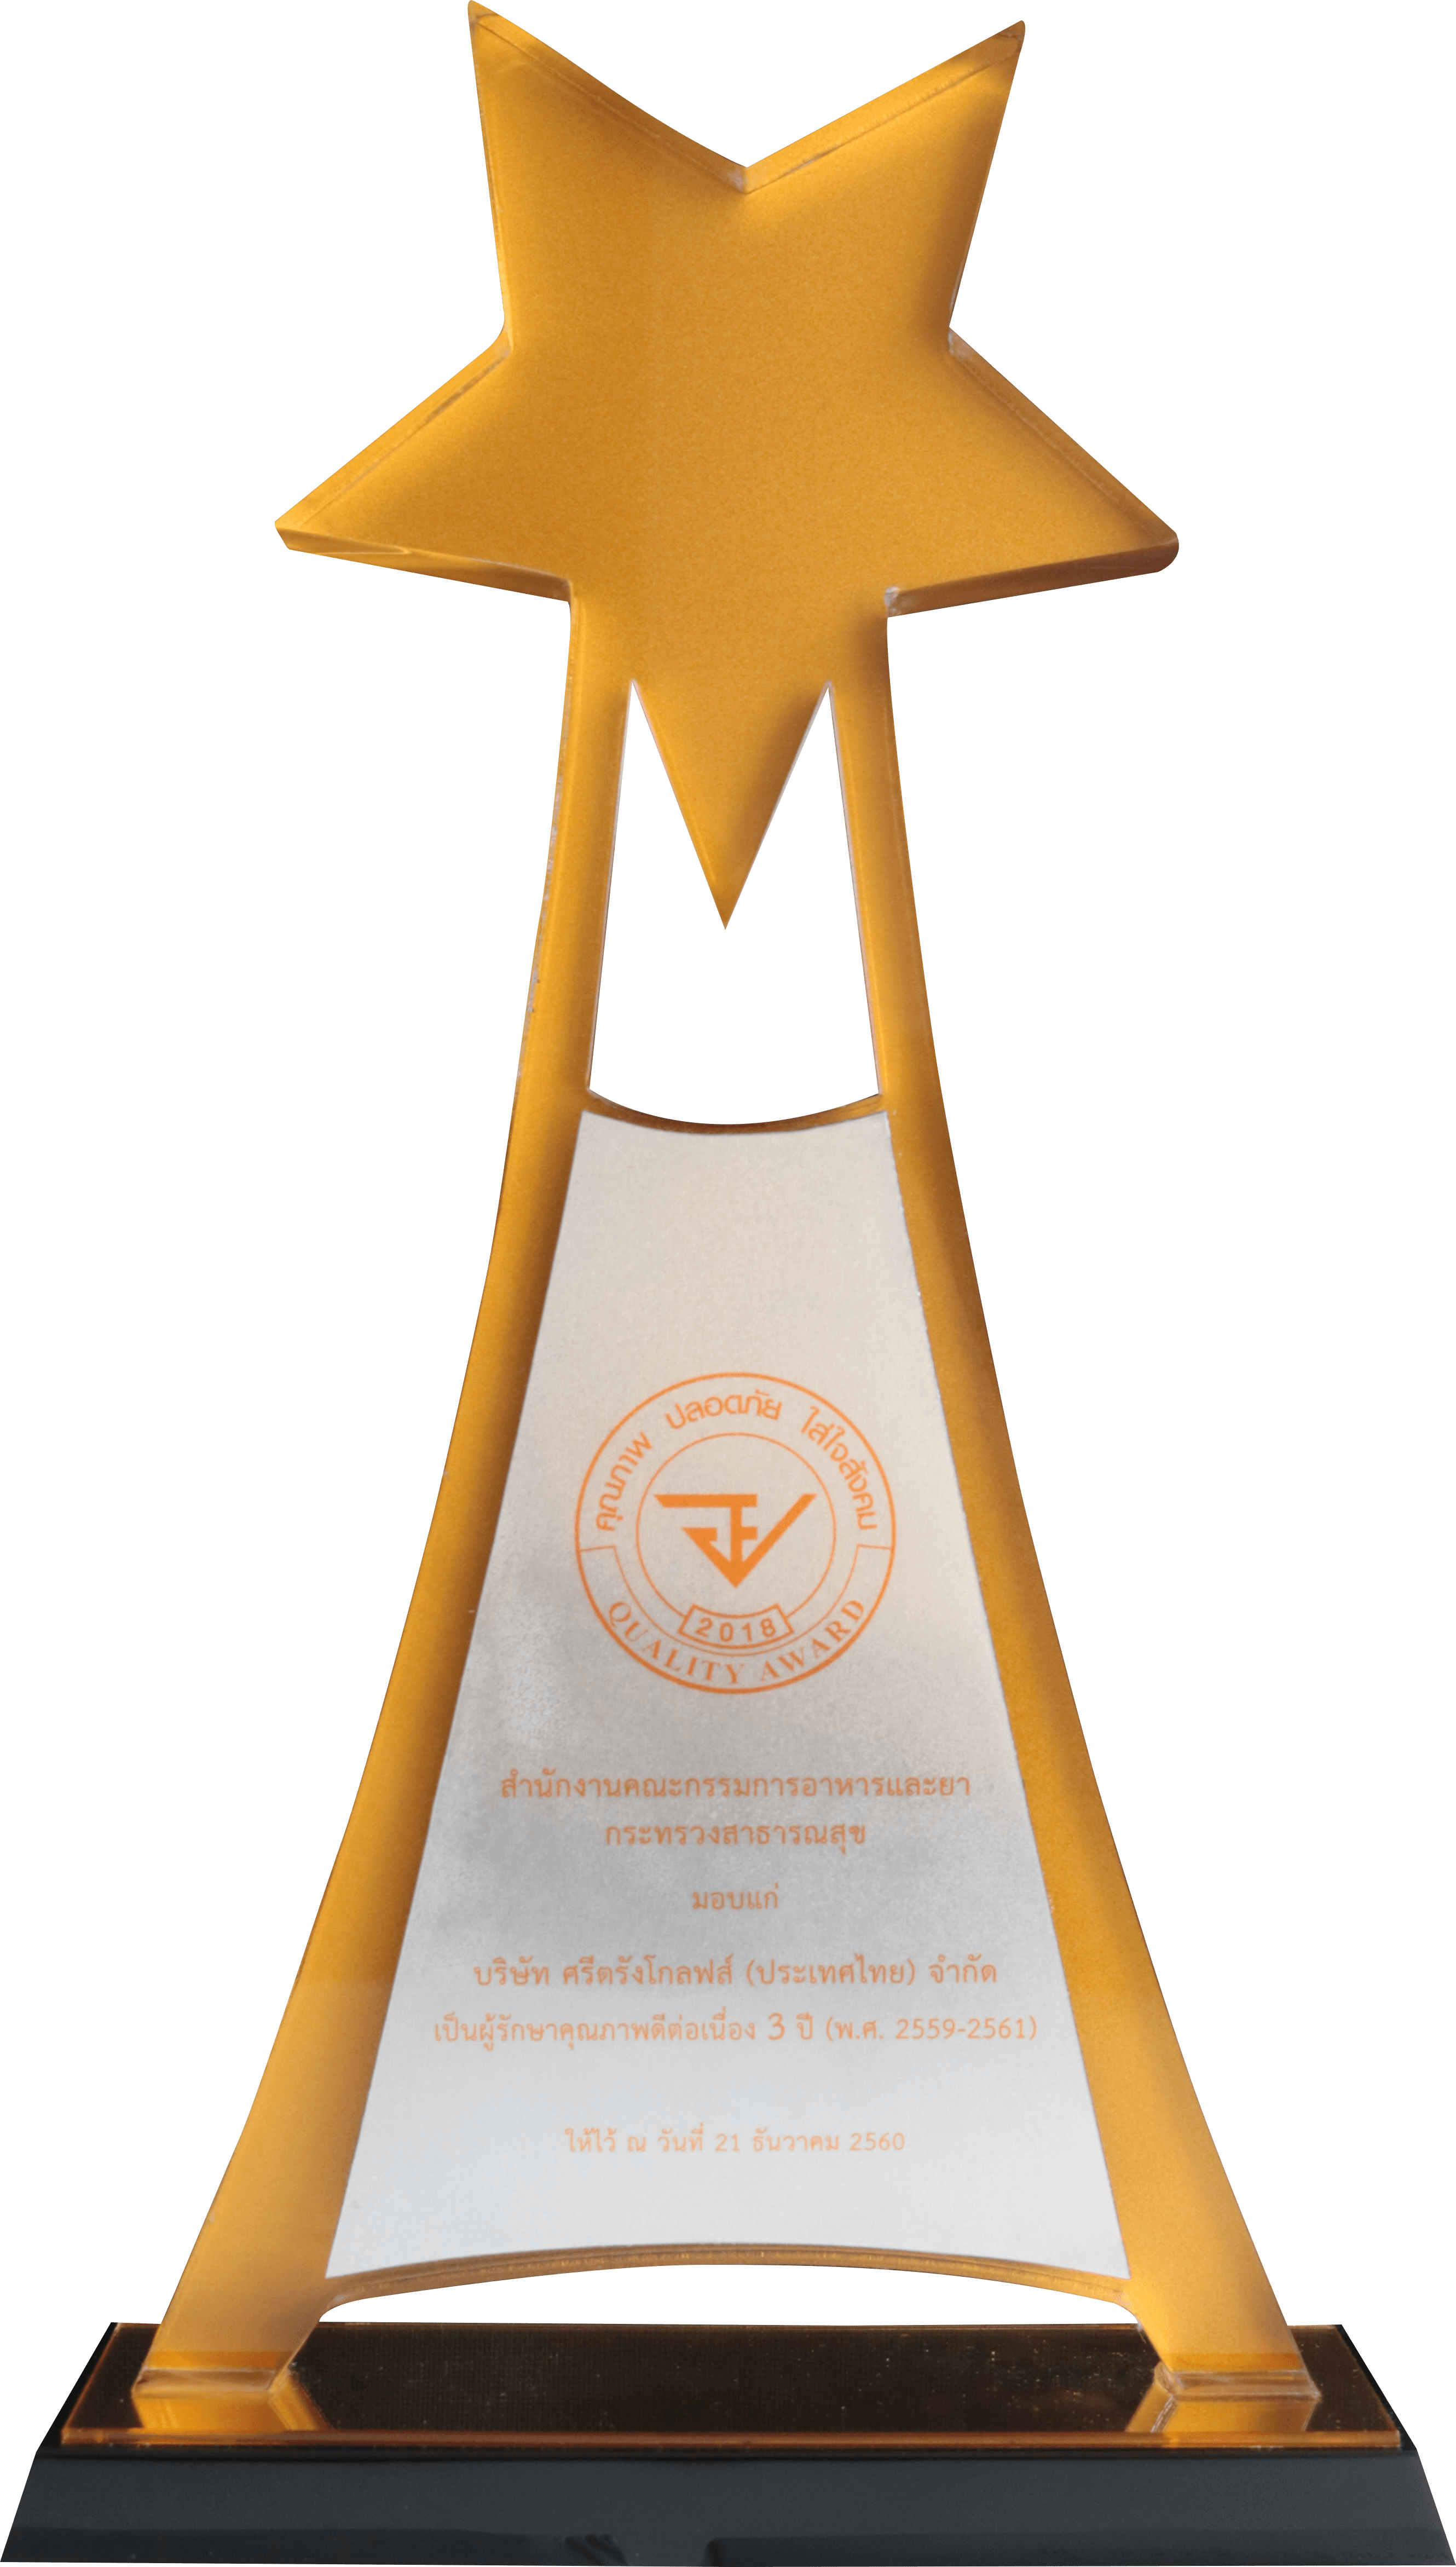 2018 3 year continuous Thai FDA Quality Award